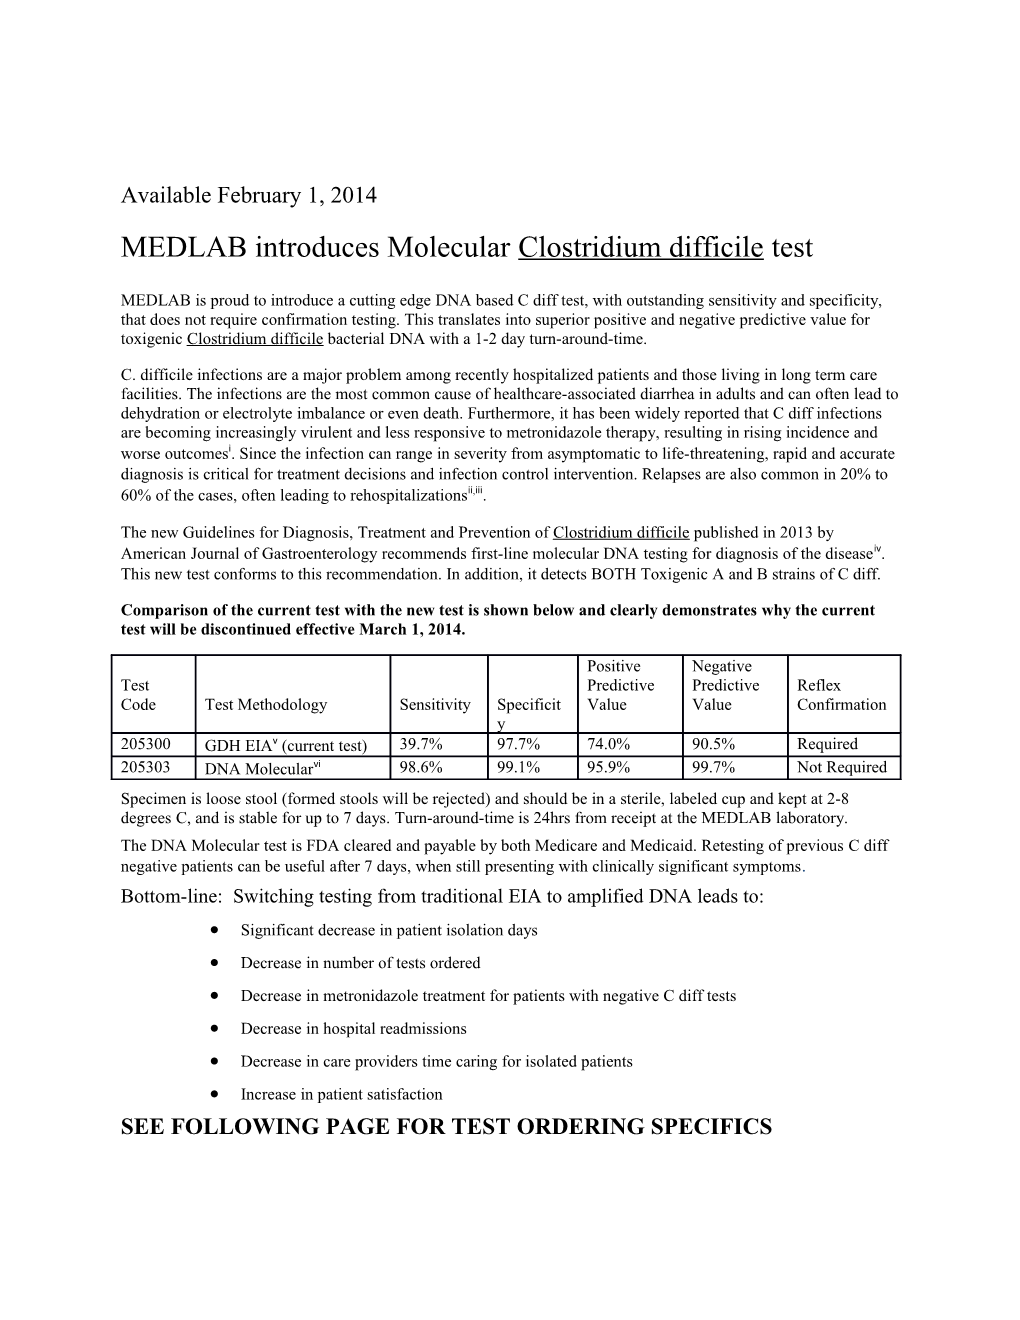 MEDLAB Introduces Molecular Clostridium Difficile Test